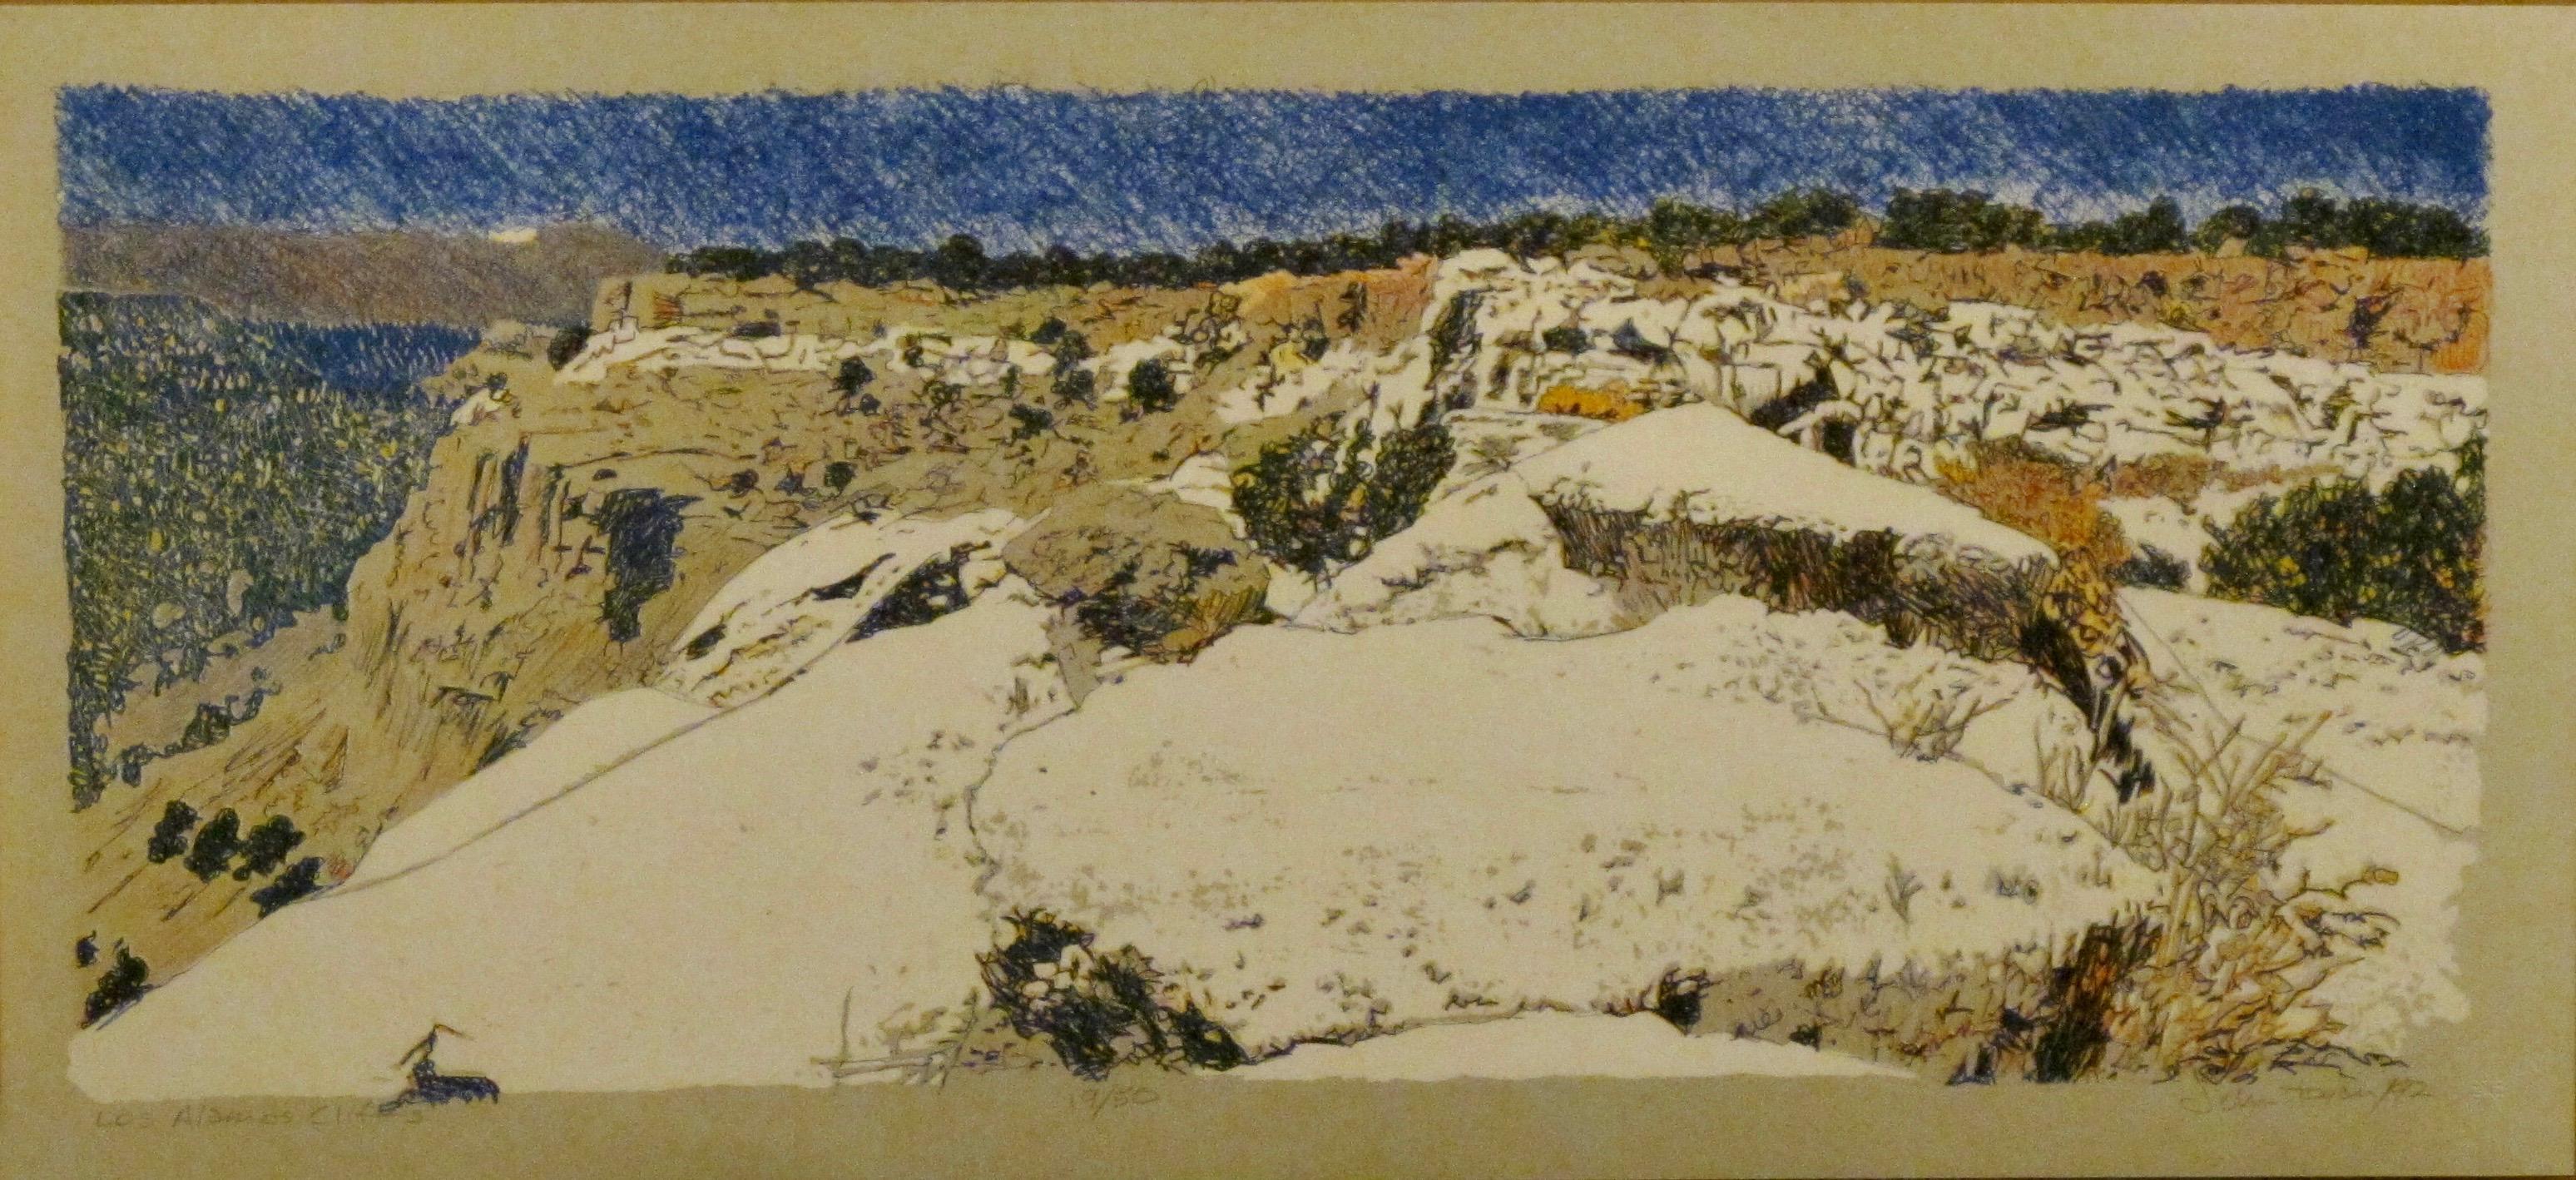 Los Alamos Cliffs, Wüstenlandschaft, Farbradierung, New Mexico, Blau, Weiß, Hellbraun (Grau), Landscape Print, von John Hogan